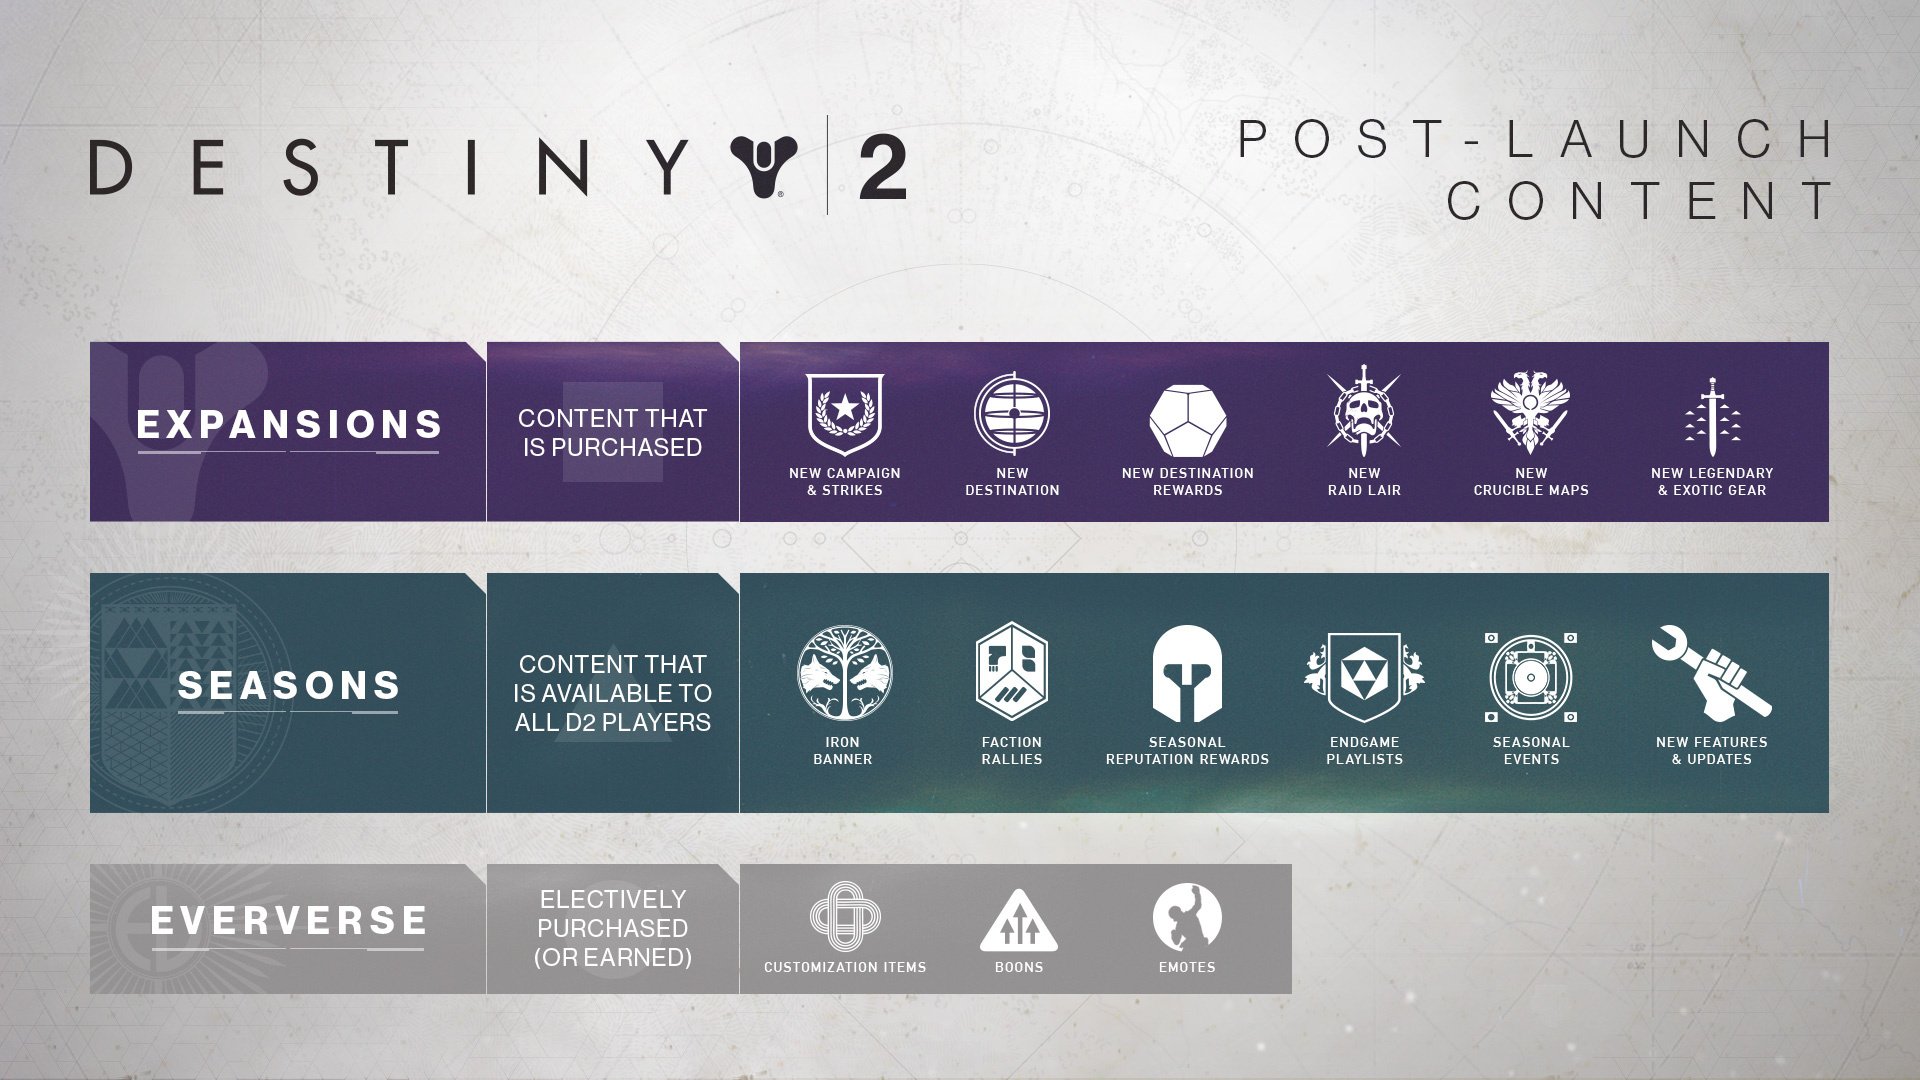 Bungie promises to rebalance Destiny 2's loot boxes, raids